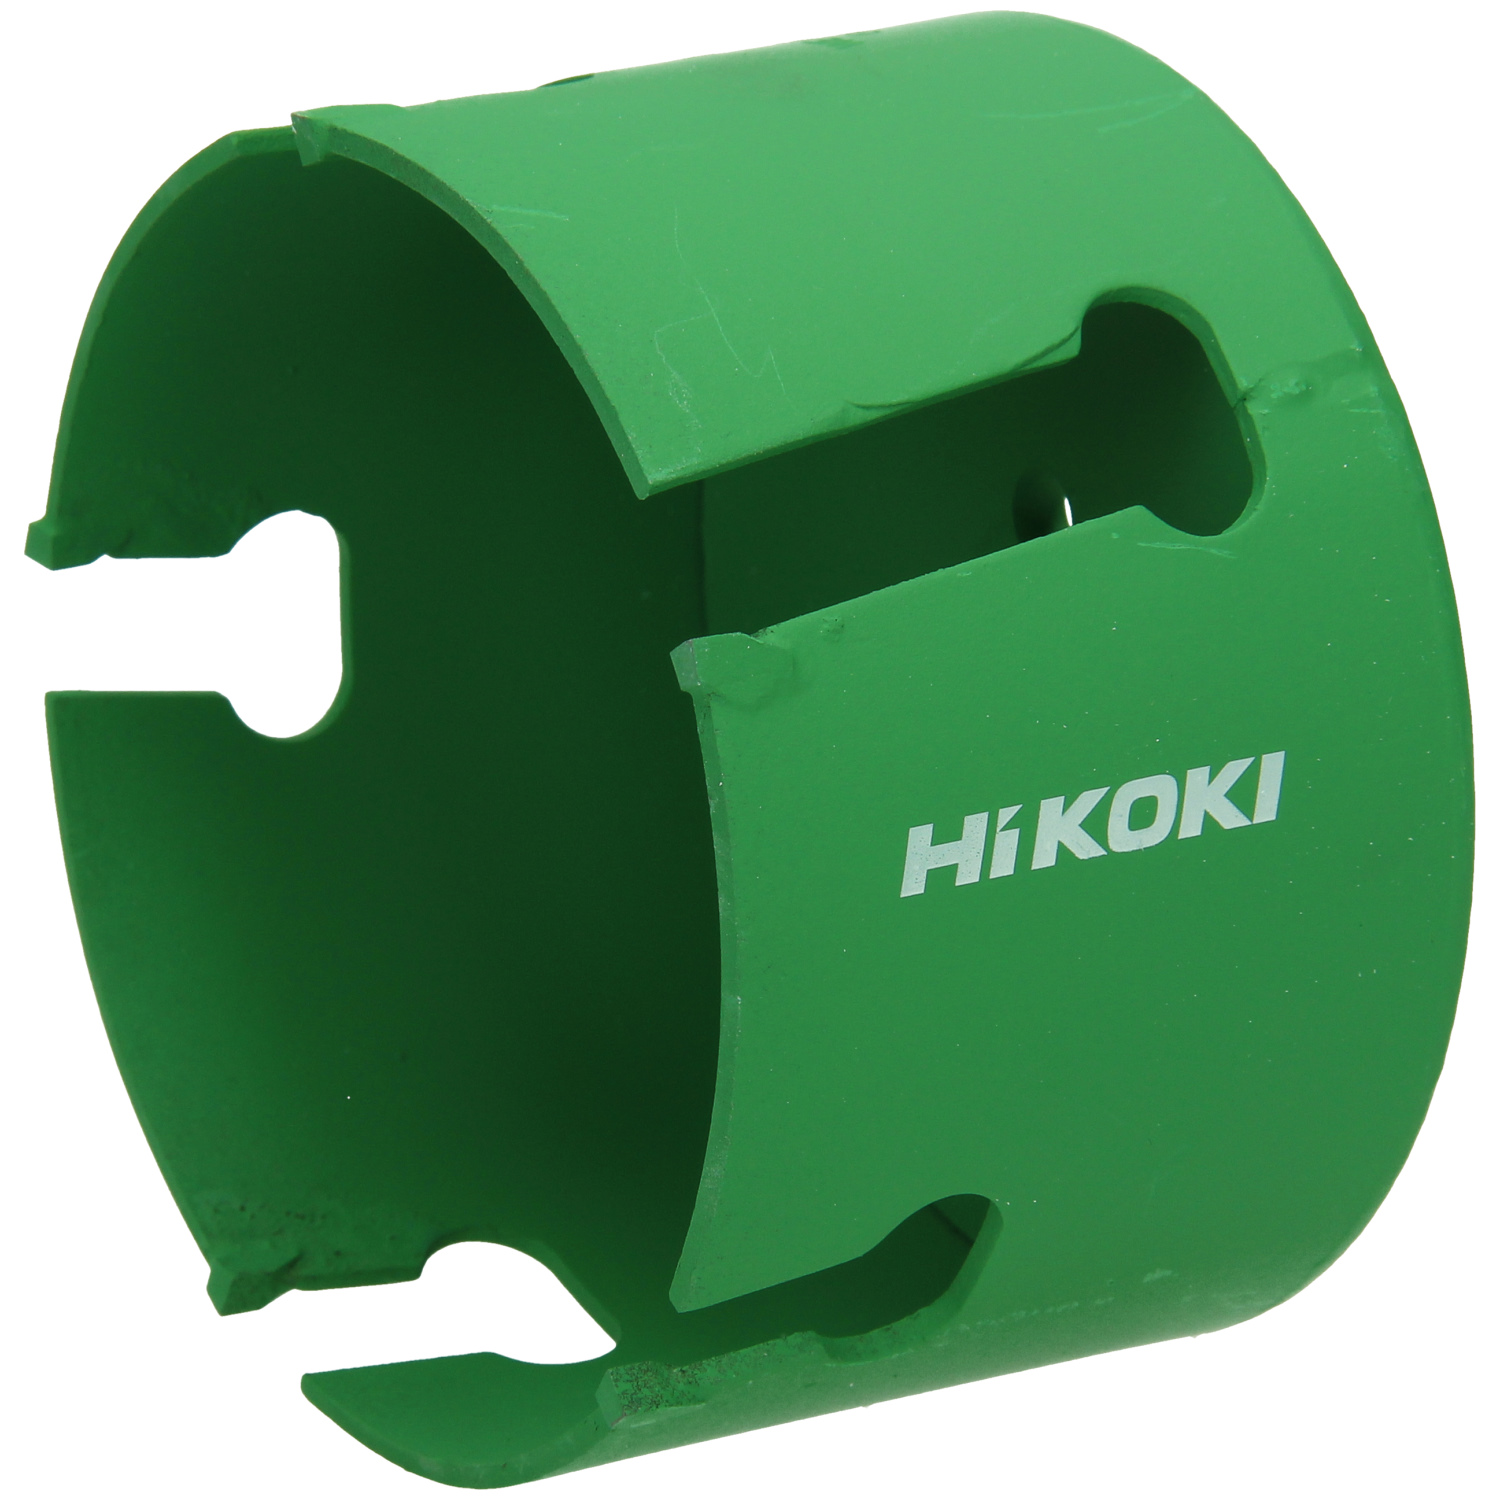 Hikoki HM-Lochsäge 102mm / -754230